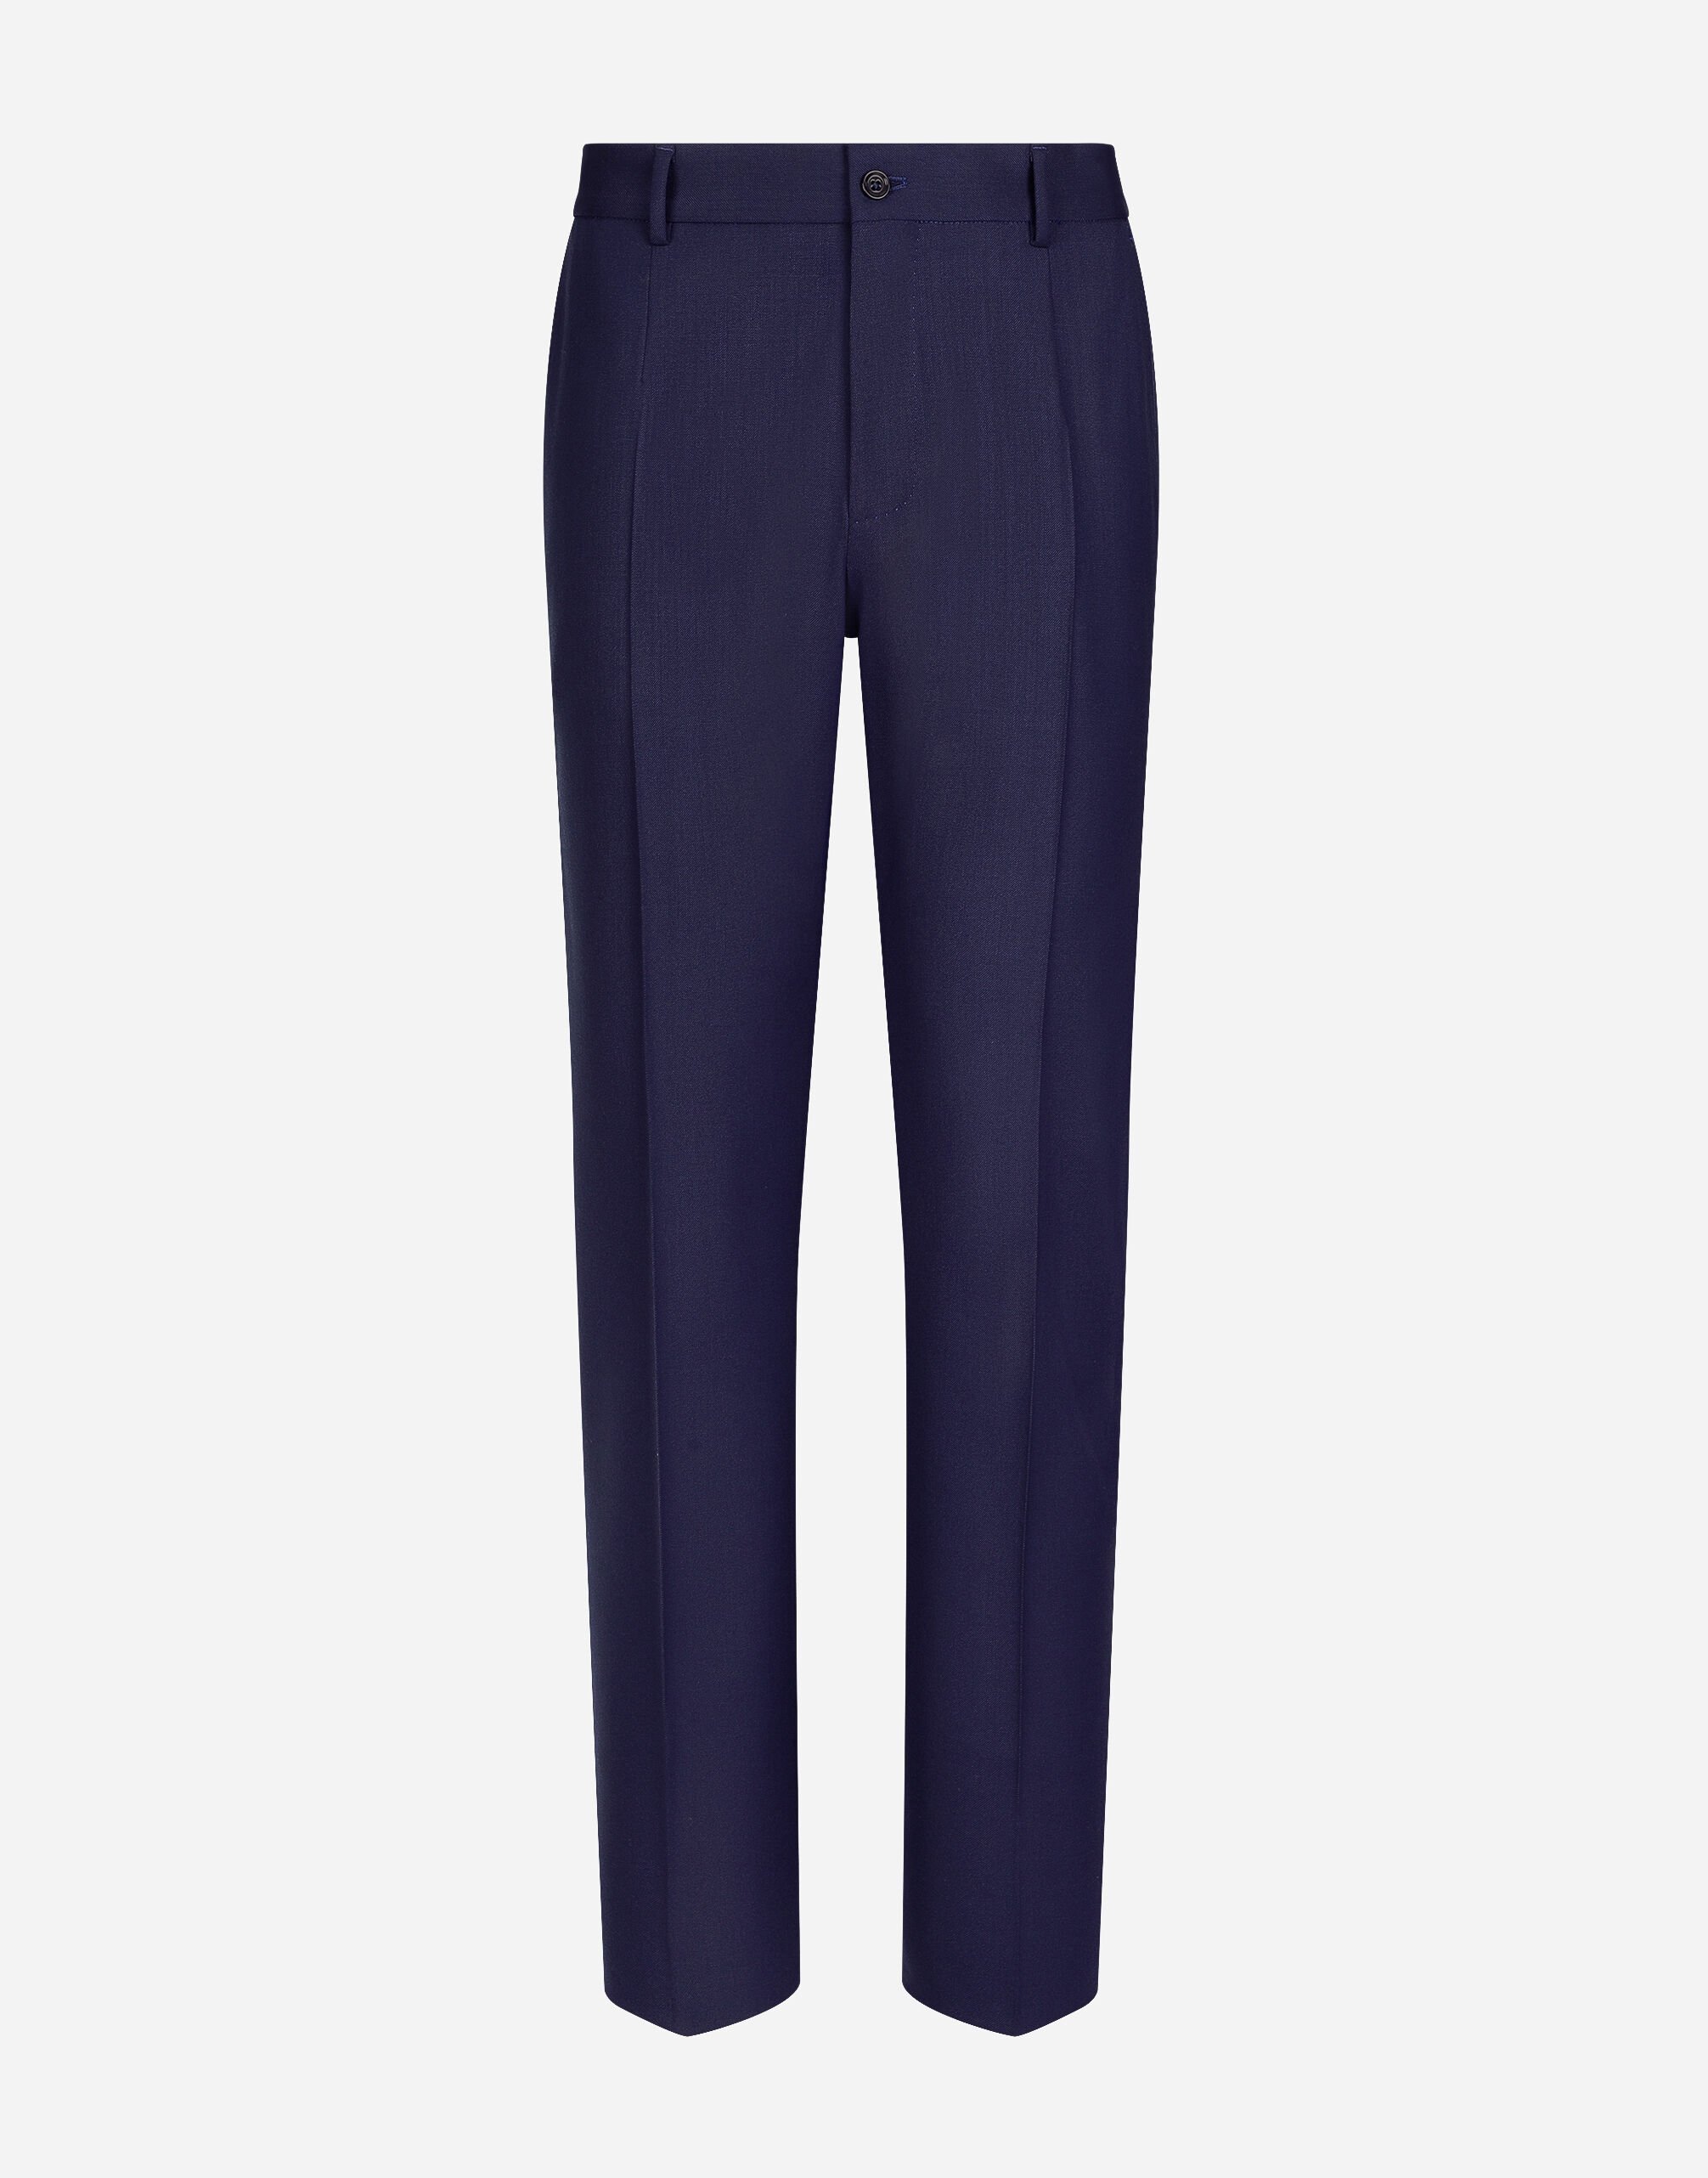 Dolce & Gabbana Tailored stretch wool pants Blue GY6IETFI5IY